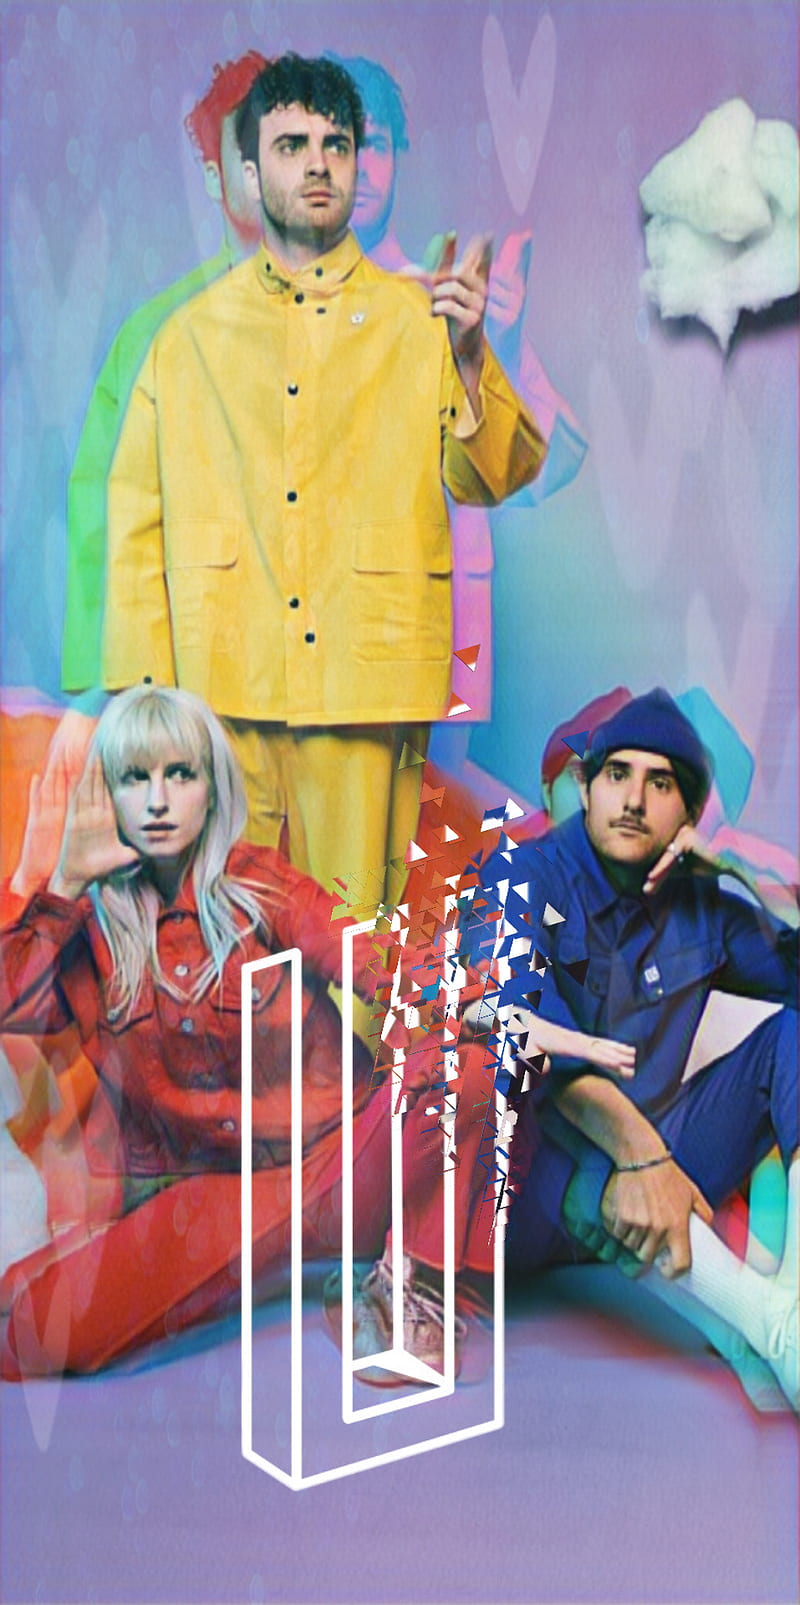 Download Paramore Band Music Album Cover Wallpaper